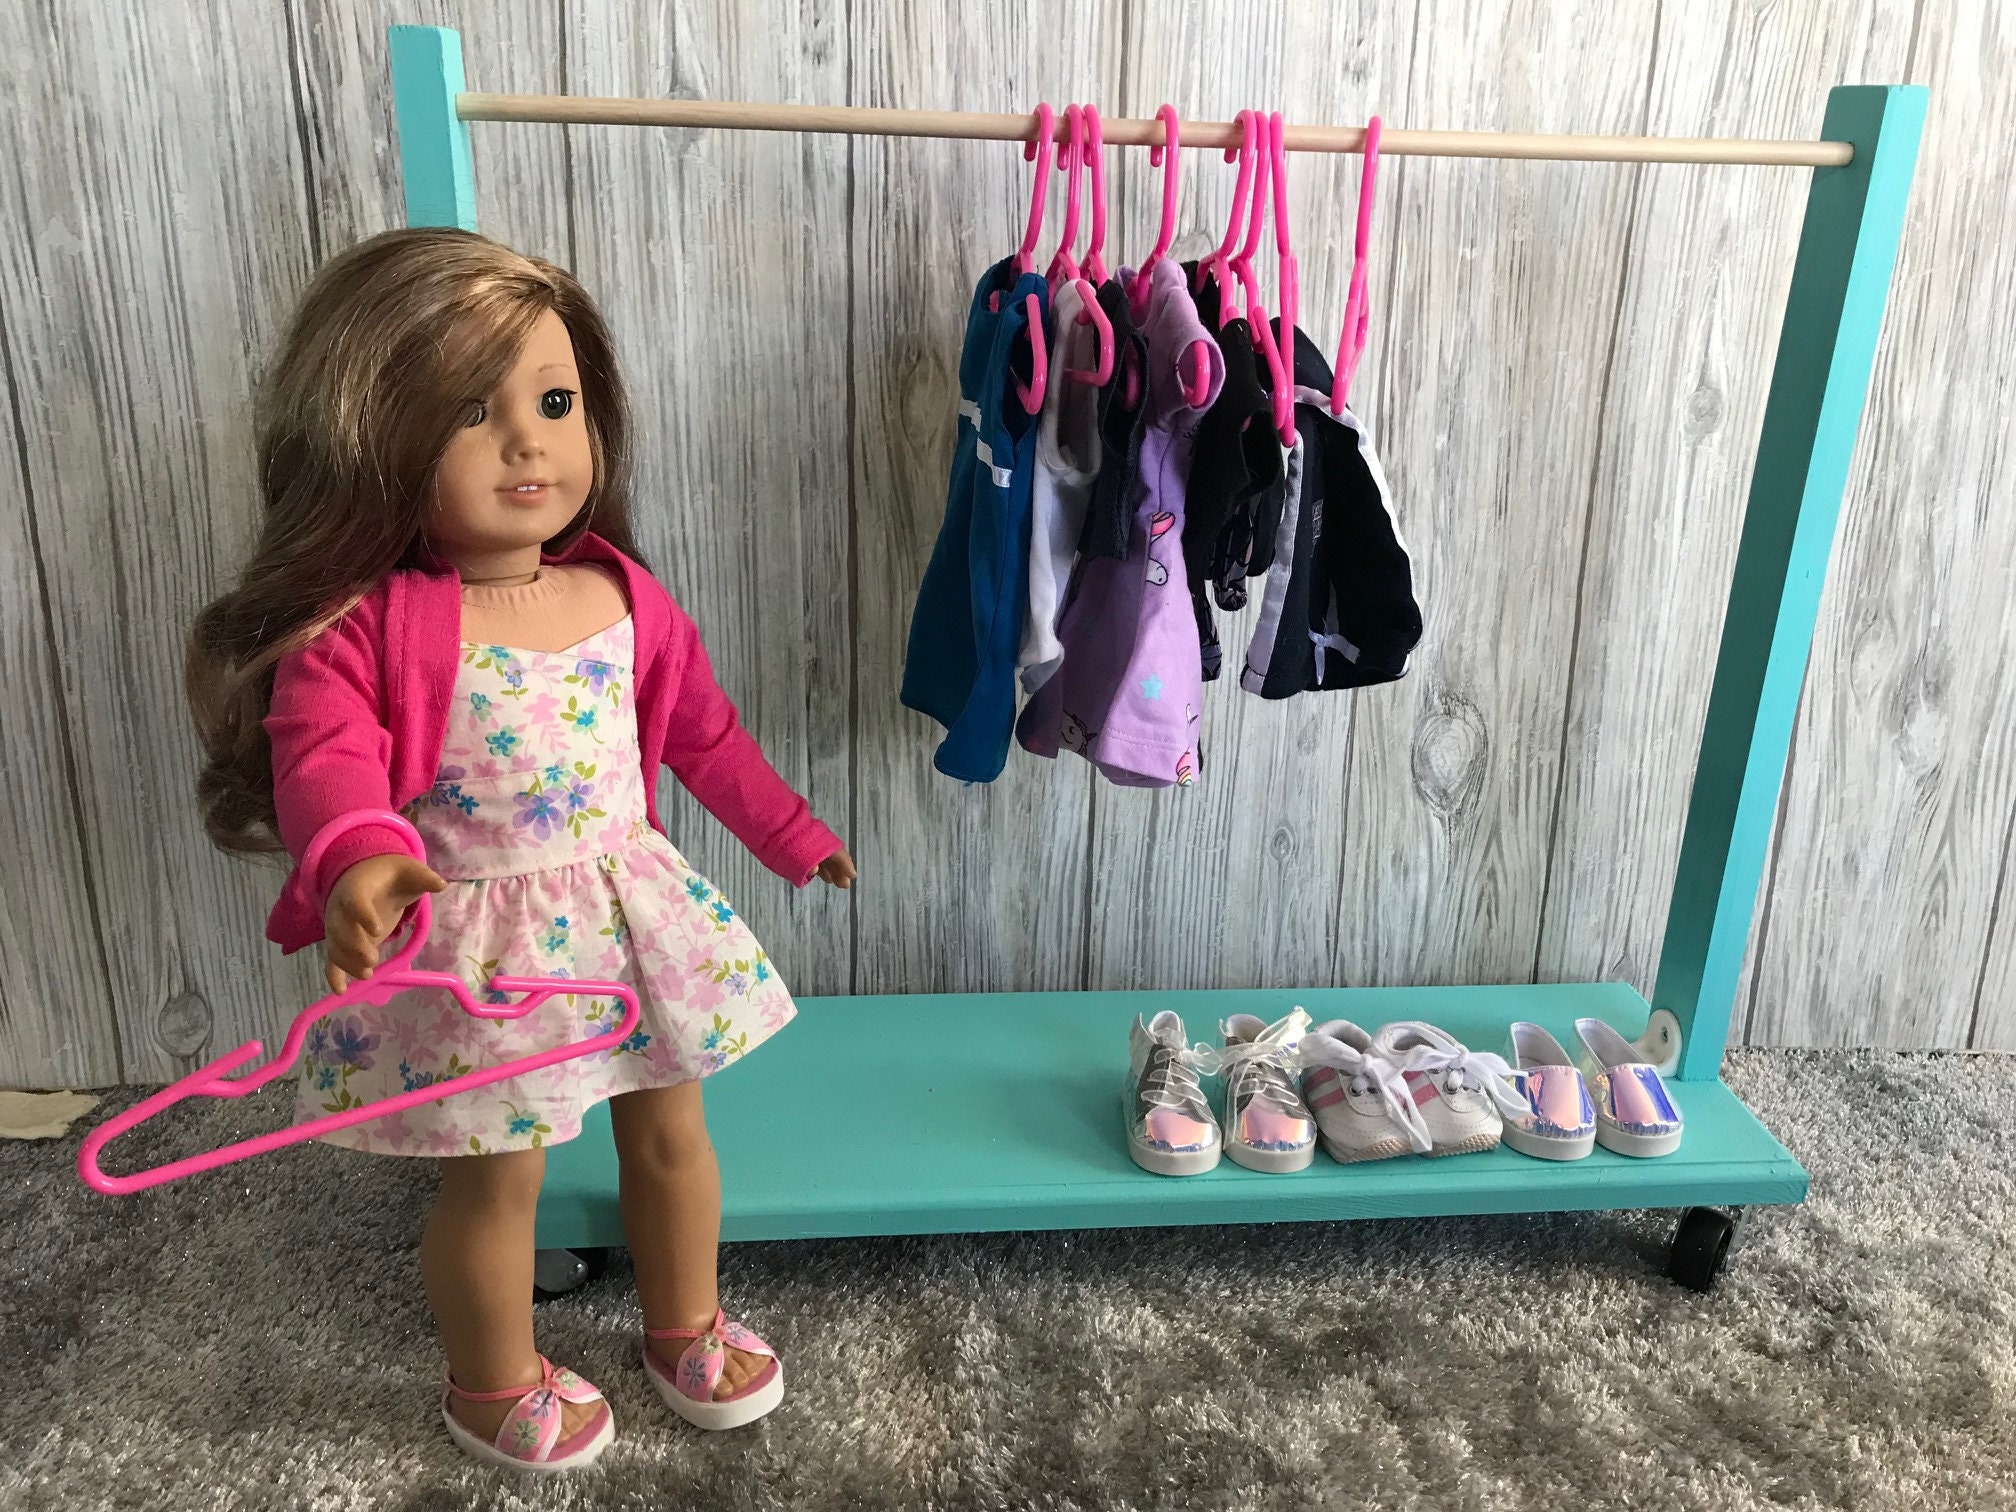 Kodycity Doll Closet Wardrobe Dollhouse Furniture Accessories 20 Pieces  Miniature Hangers Clothing Organizer for Dolls